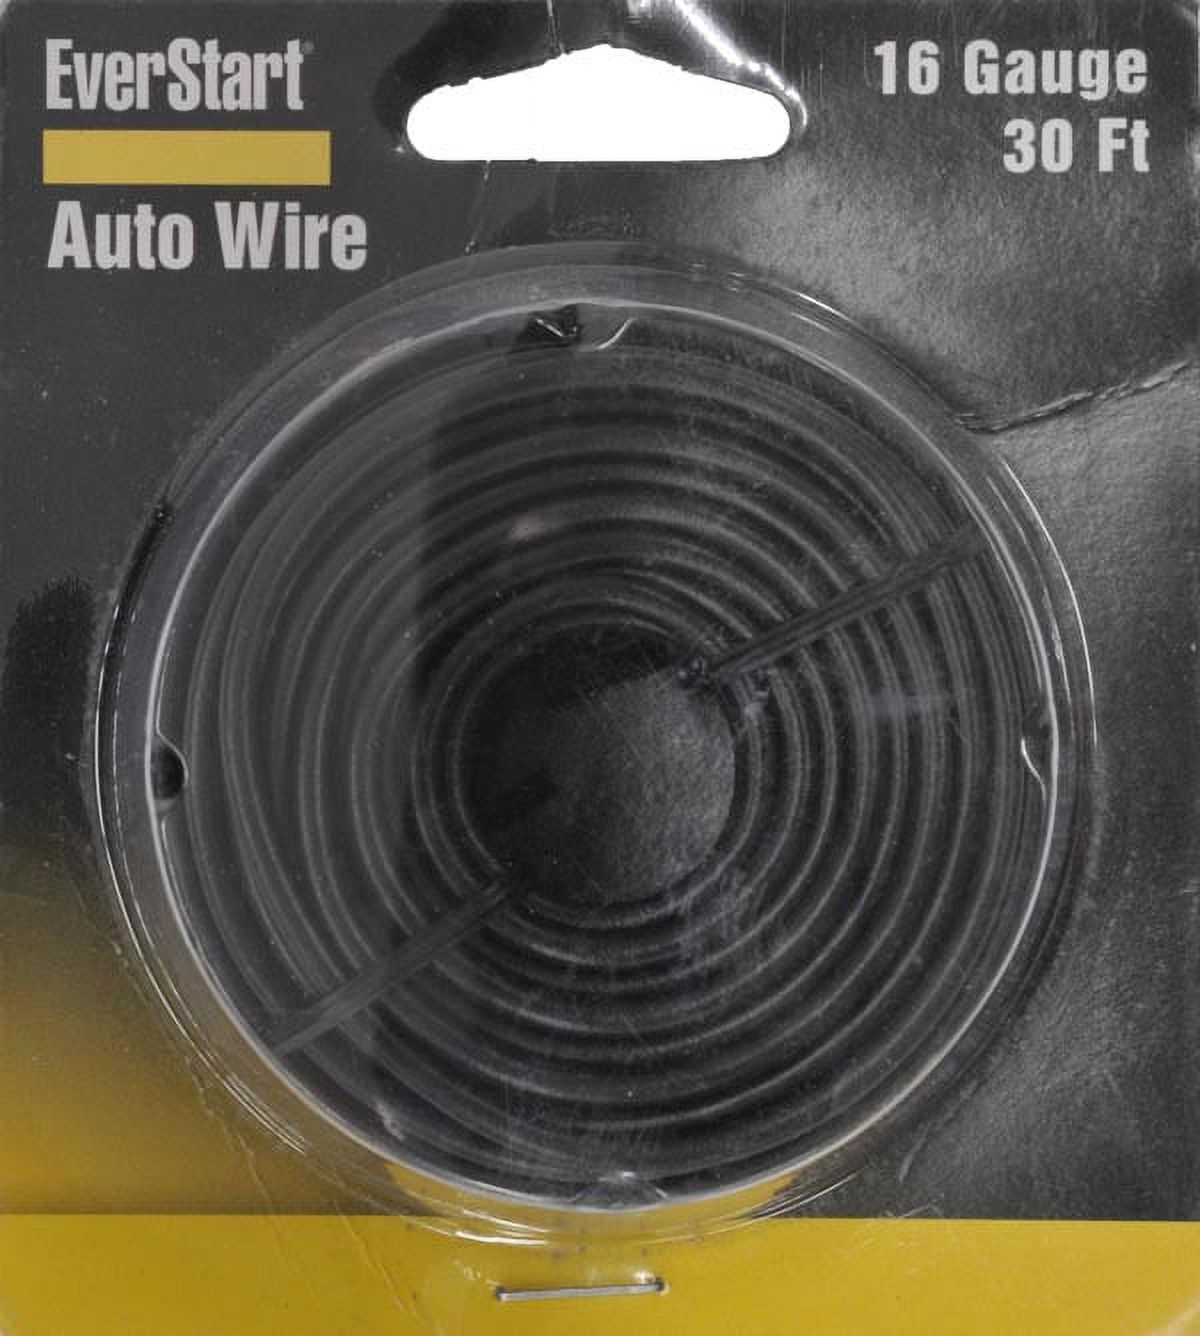 Everstart 51652-76-08 16-Gauge 30' Black Primary Automotive Wire - image 2 of 2